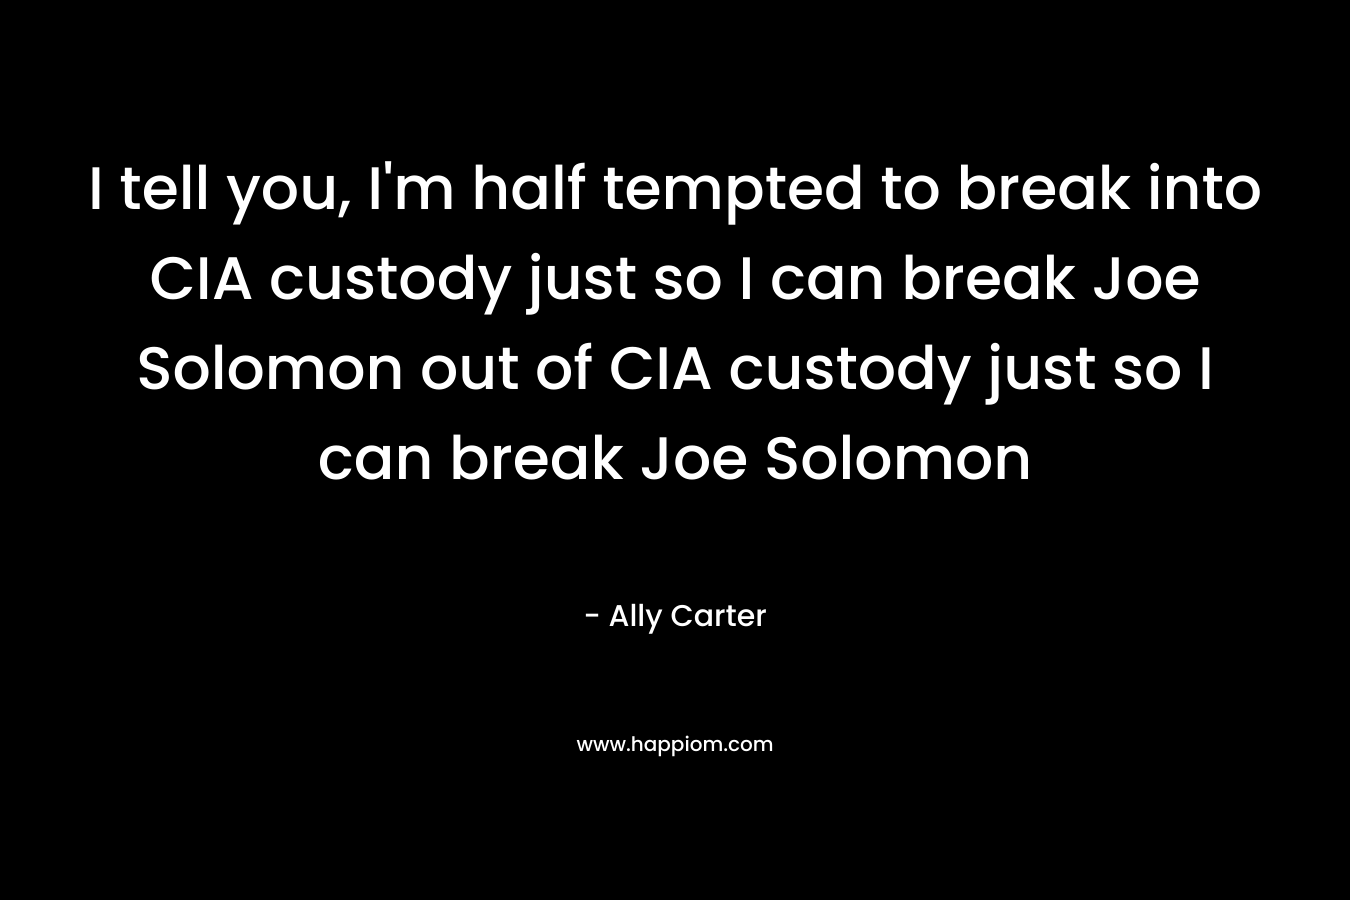 I tell you, I'm half tempted to break into CIA custody just so I can break Joe Solomon out of CIA custody just so I can break Joe Solomon